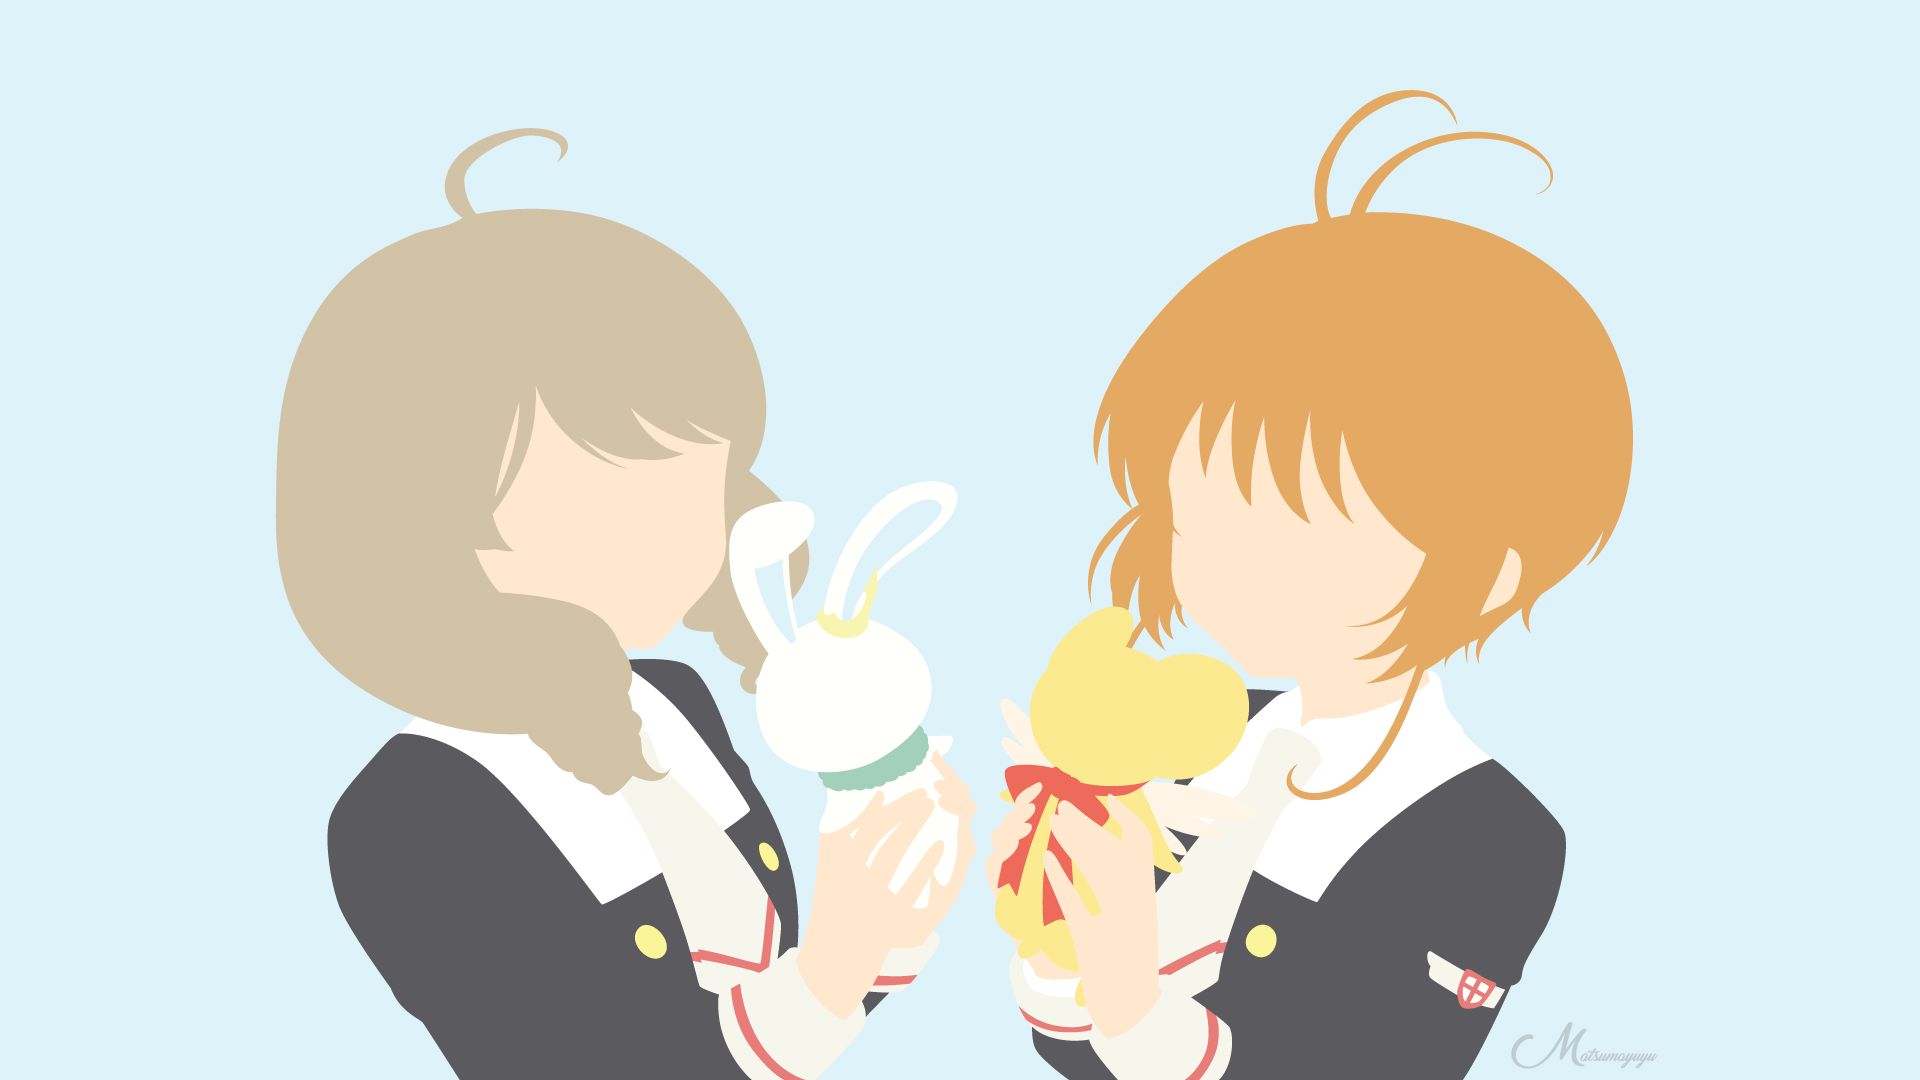 Cardcaptor Sakura: Clear Card Happiness Memories Smartphone Game